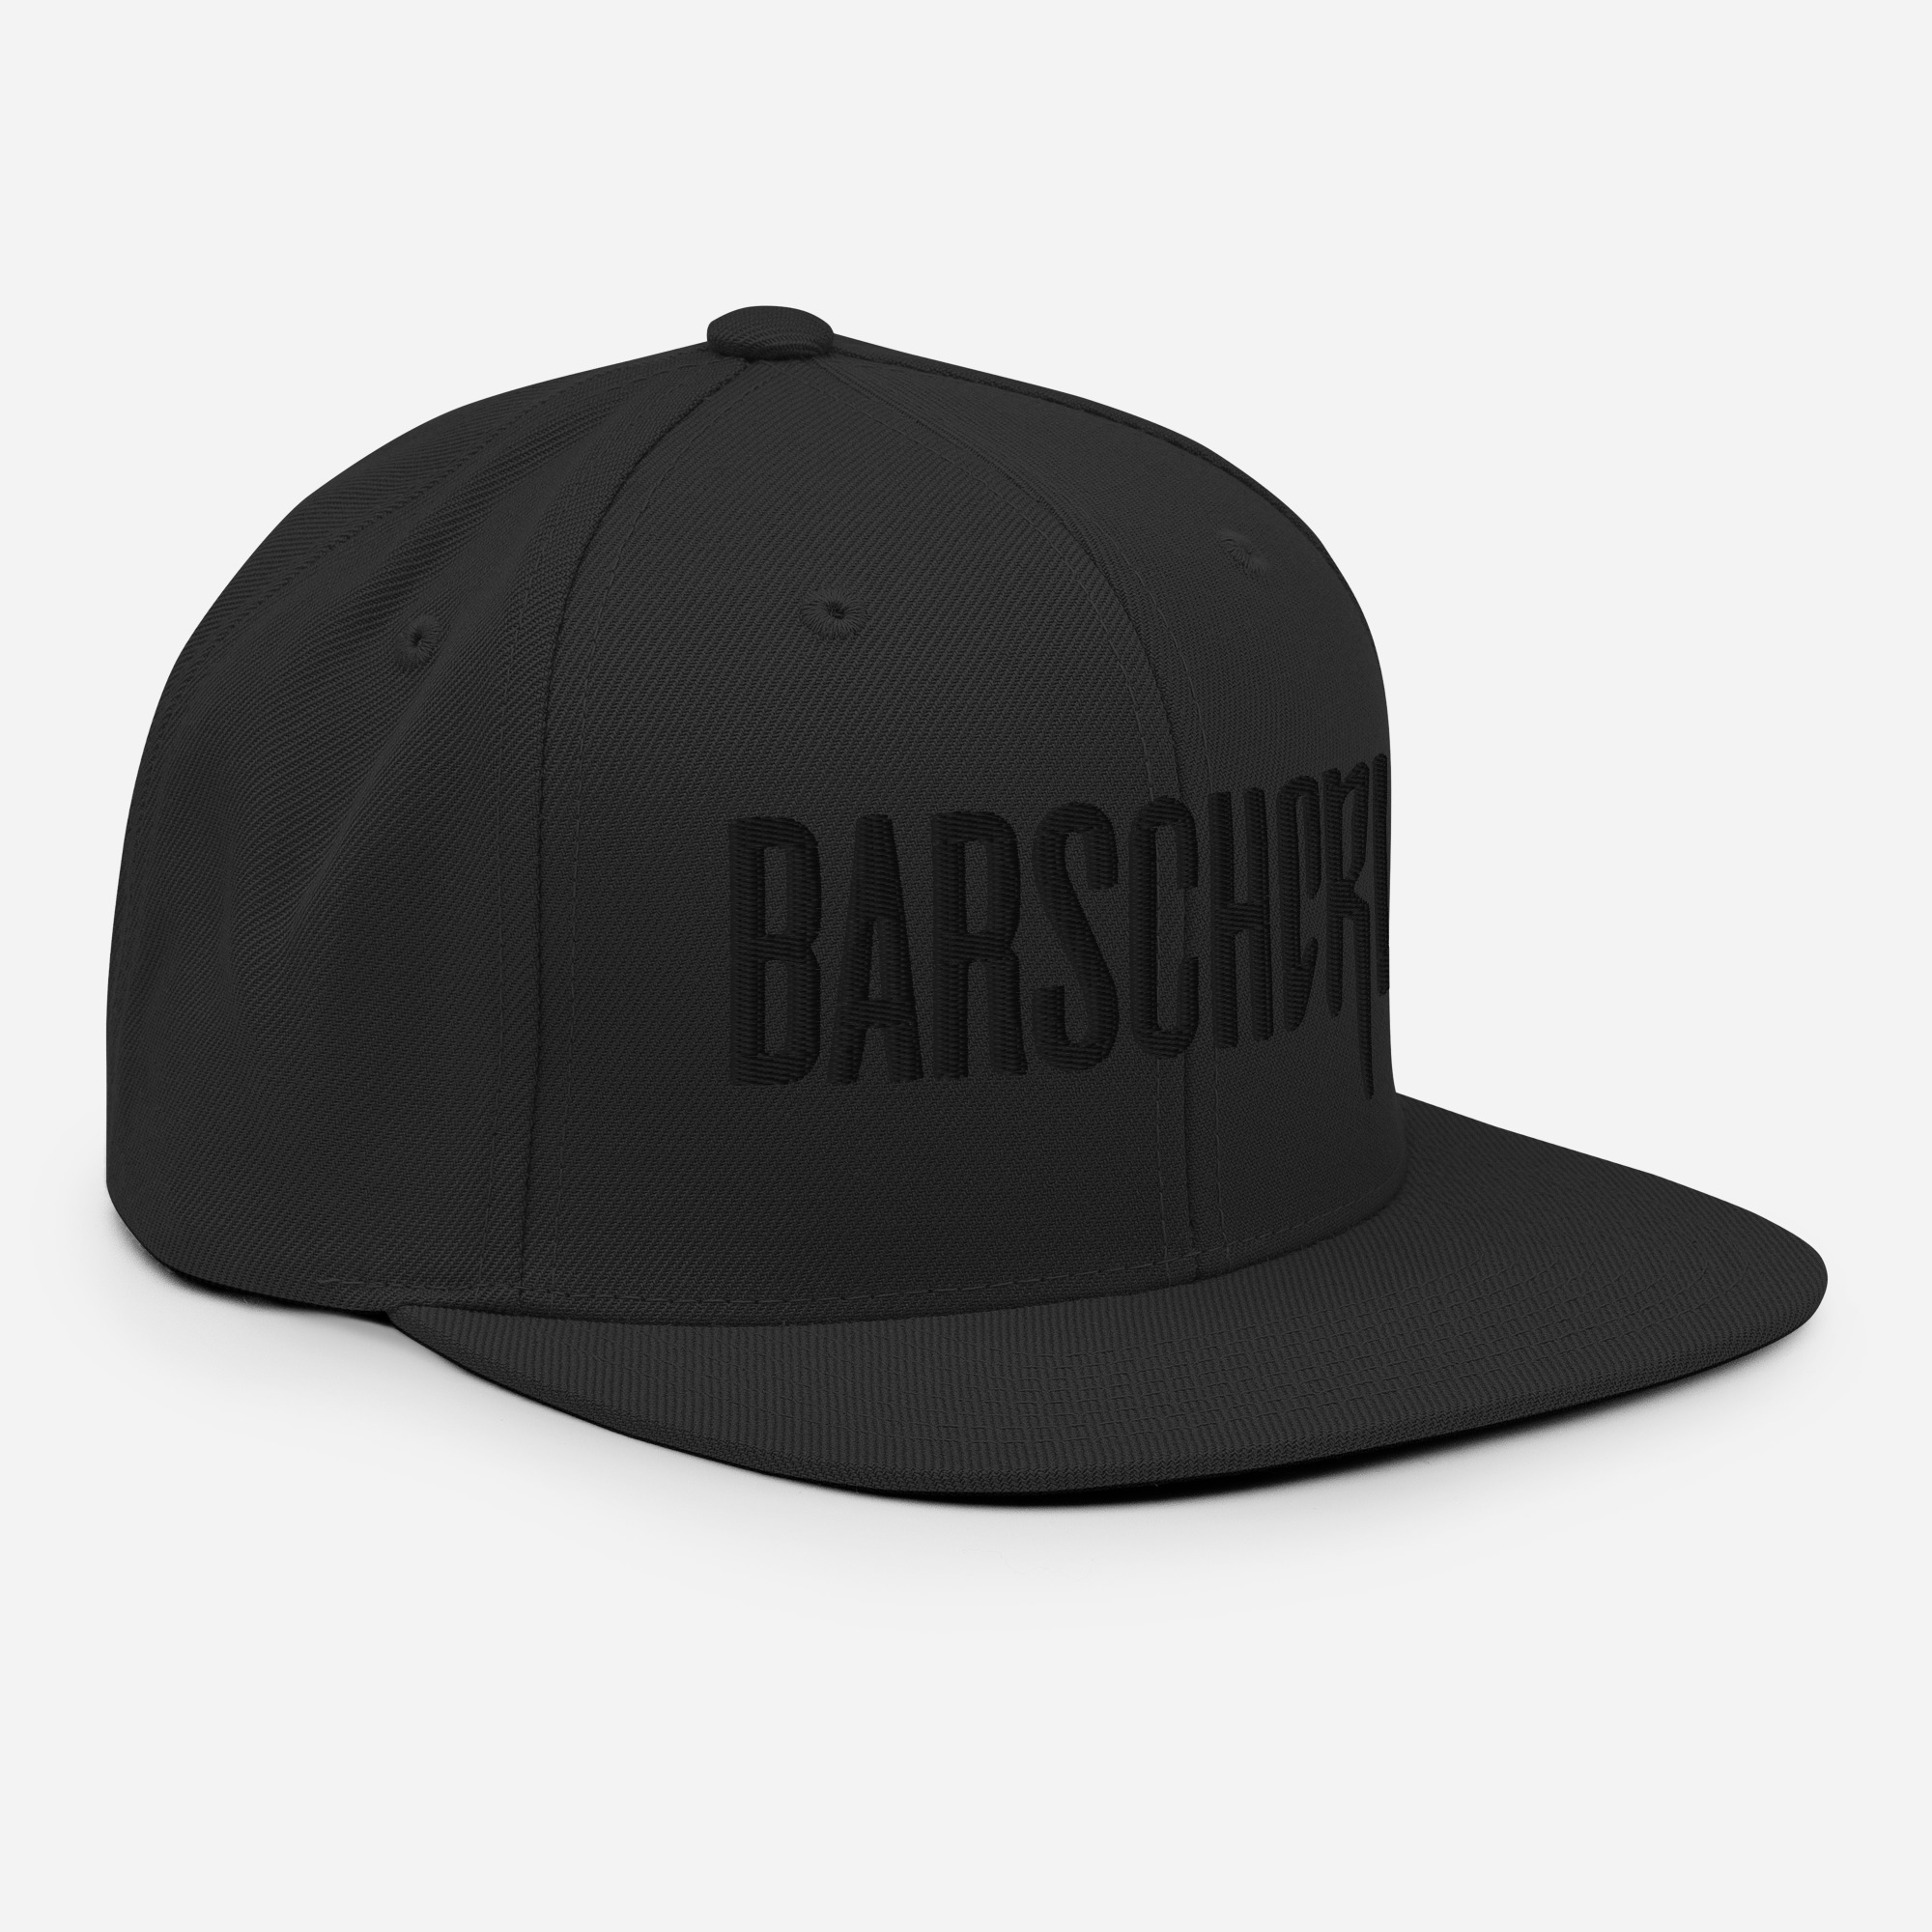 Barschcru bla Edition